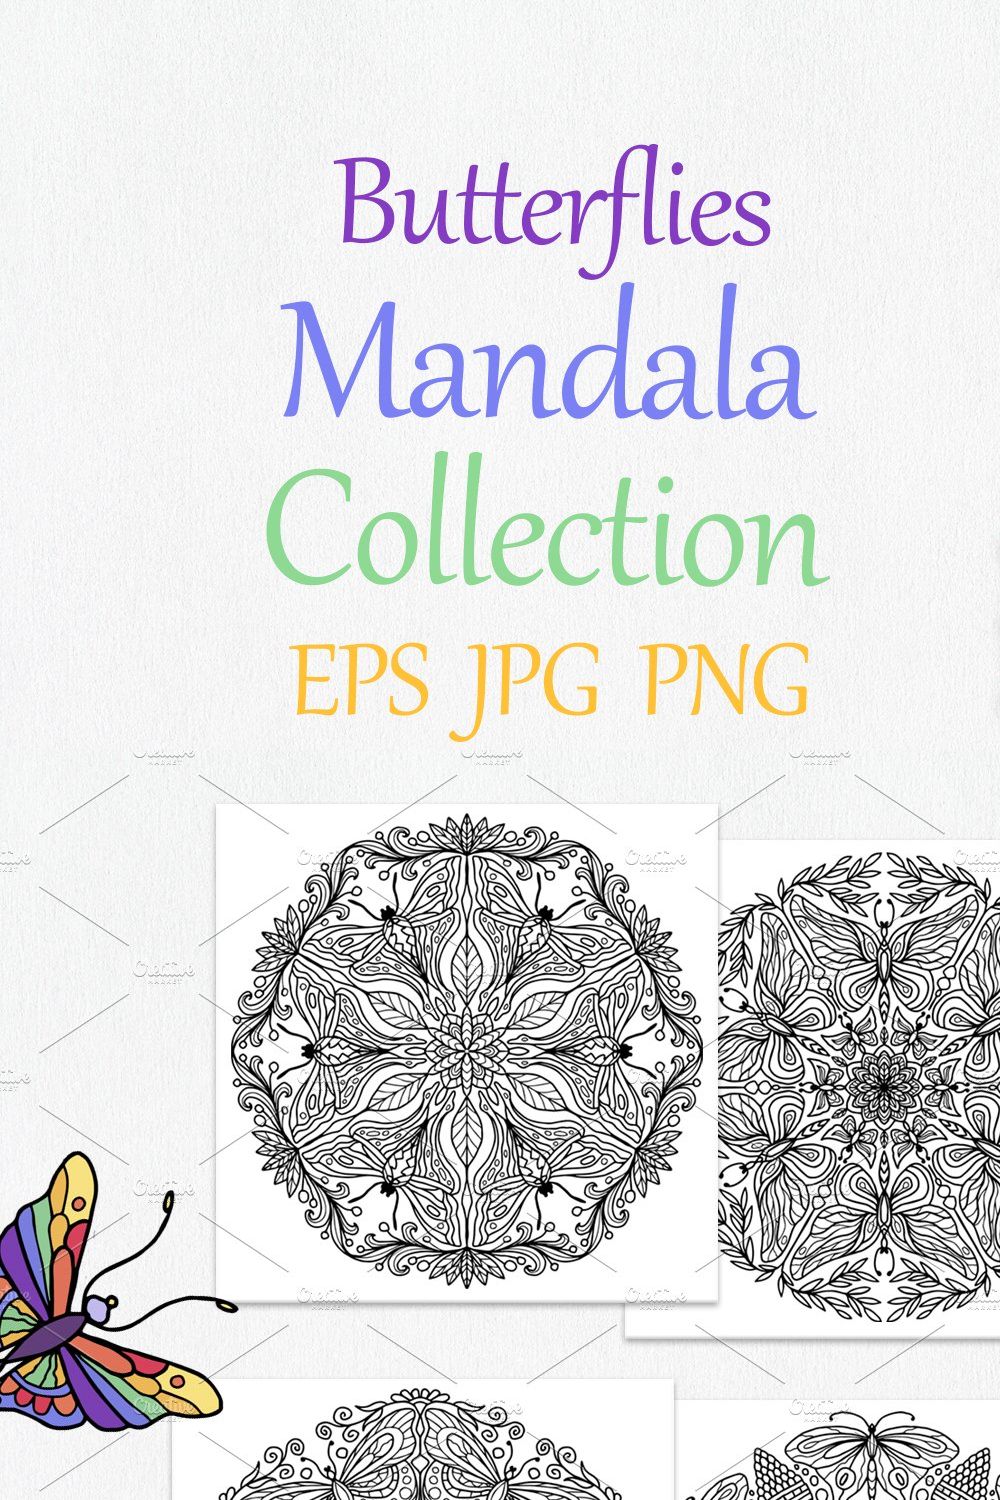 Butterflies mandala collection pinterest preview image.